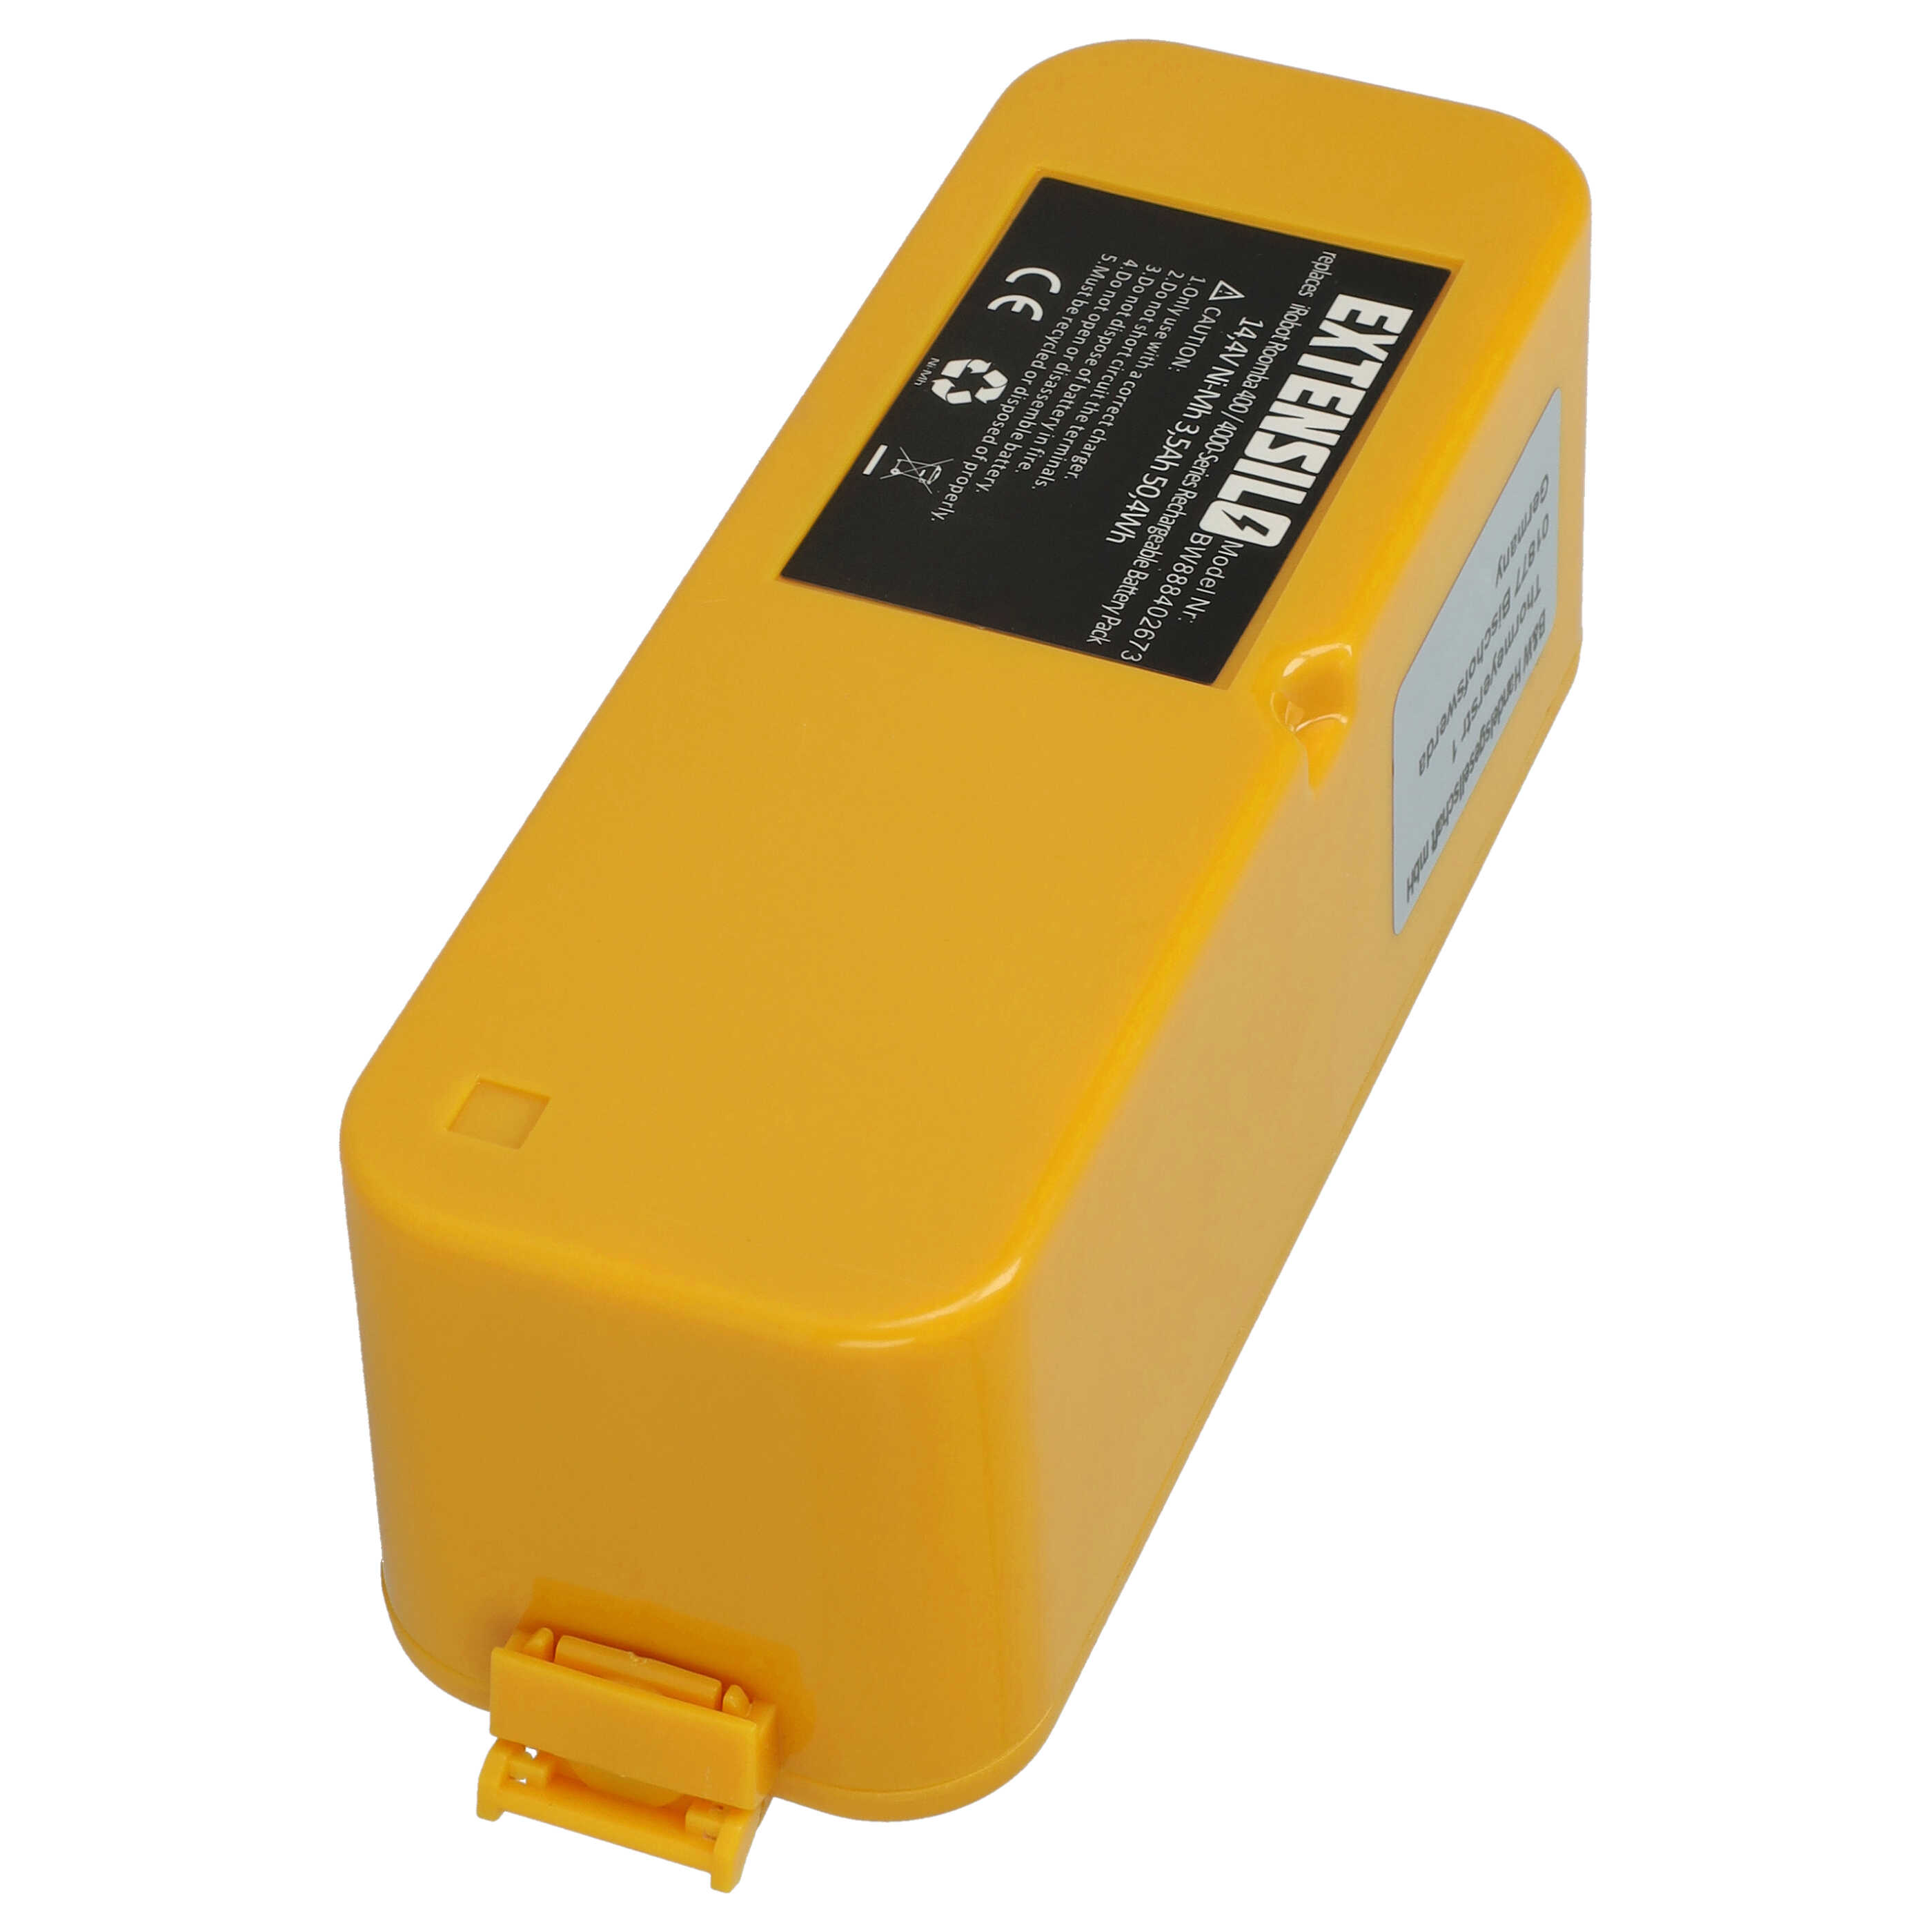 Akumulator do robota zamiennik APS 4905, NC-3493-919, 11700, 17373 - 3500 mAh 14,4 V NiMH, żółty